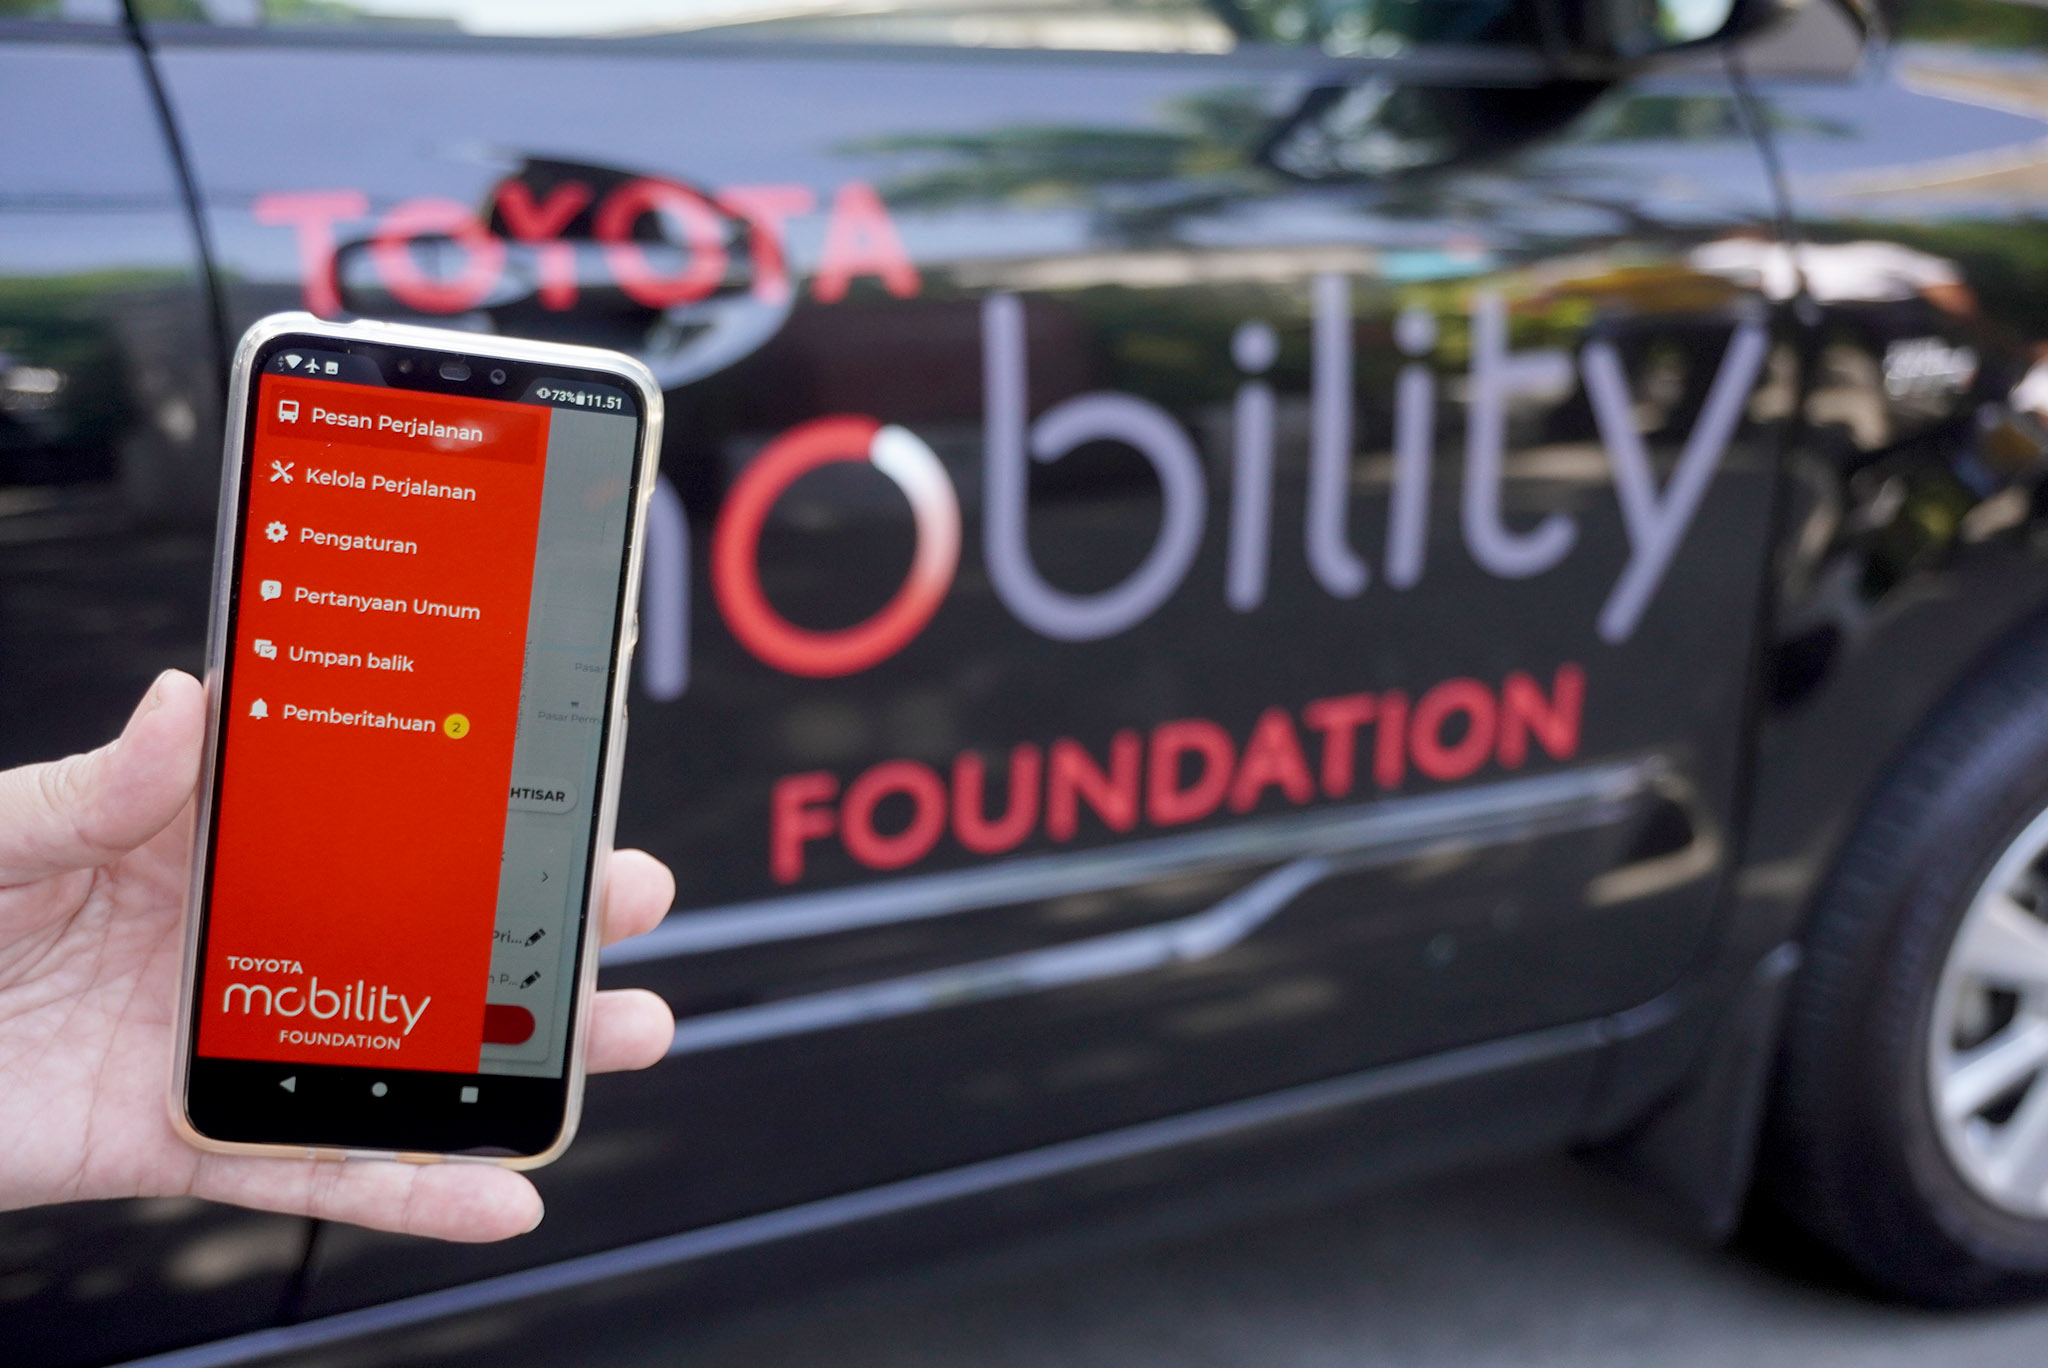 Toyota Mobility Foundation